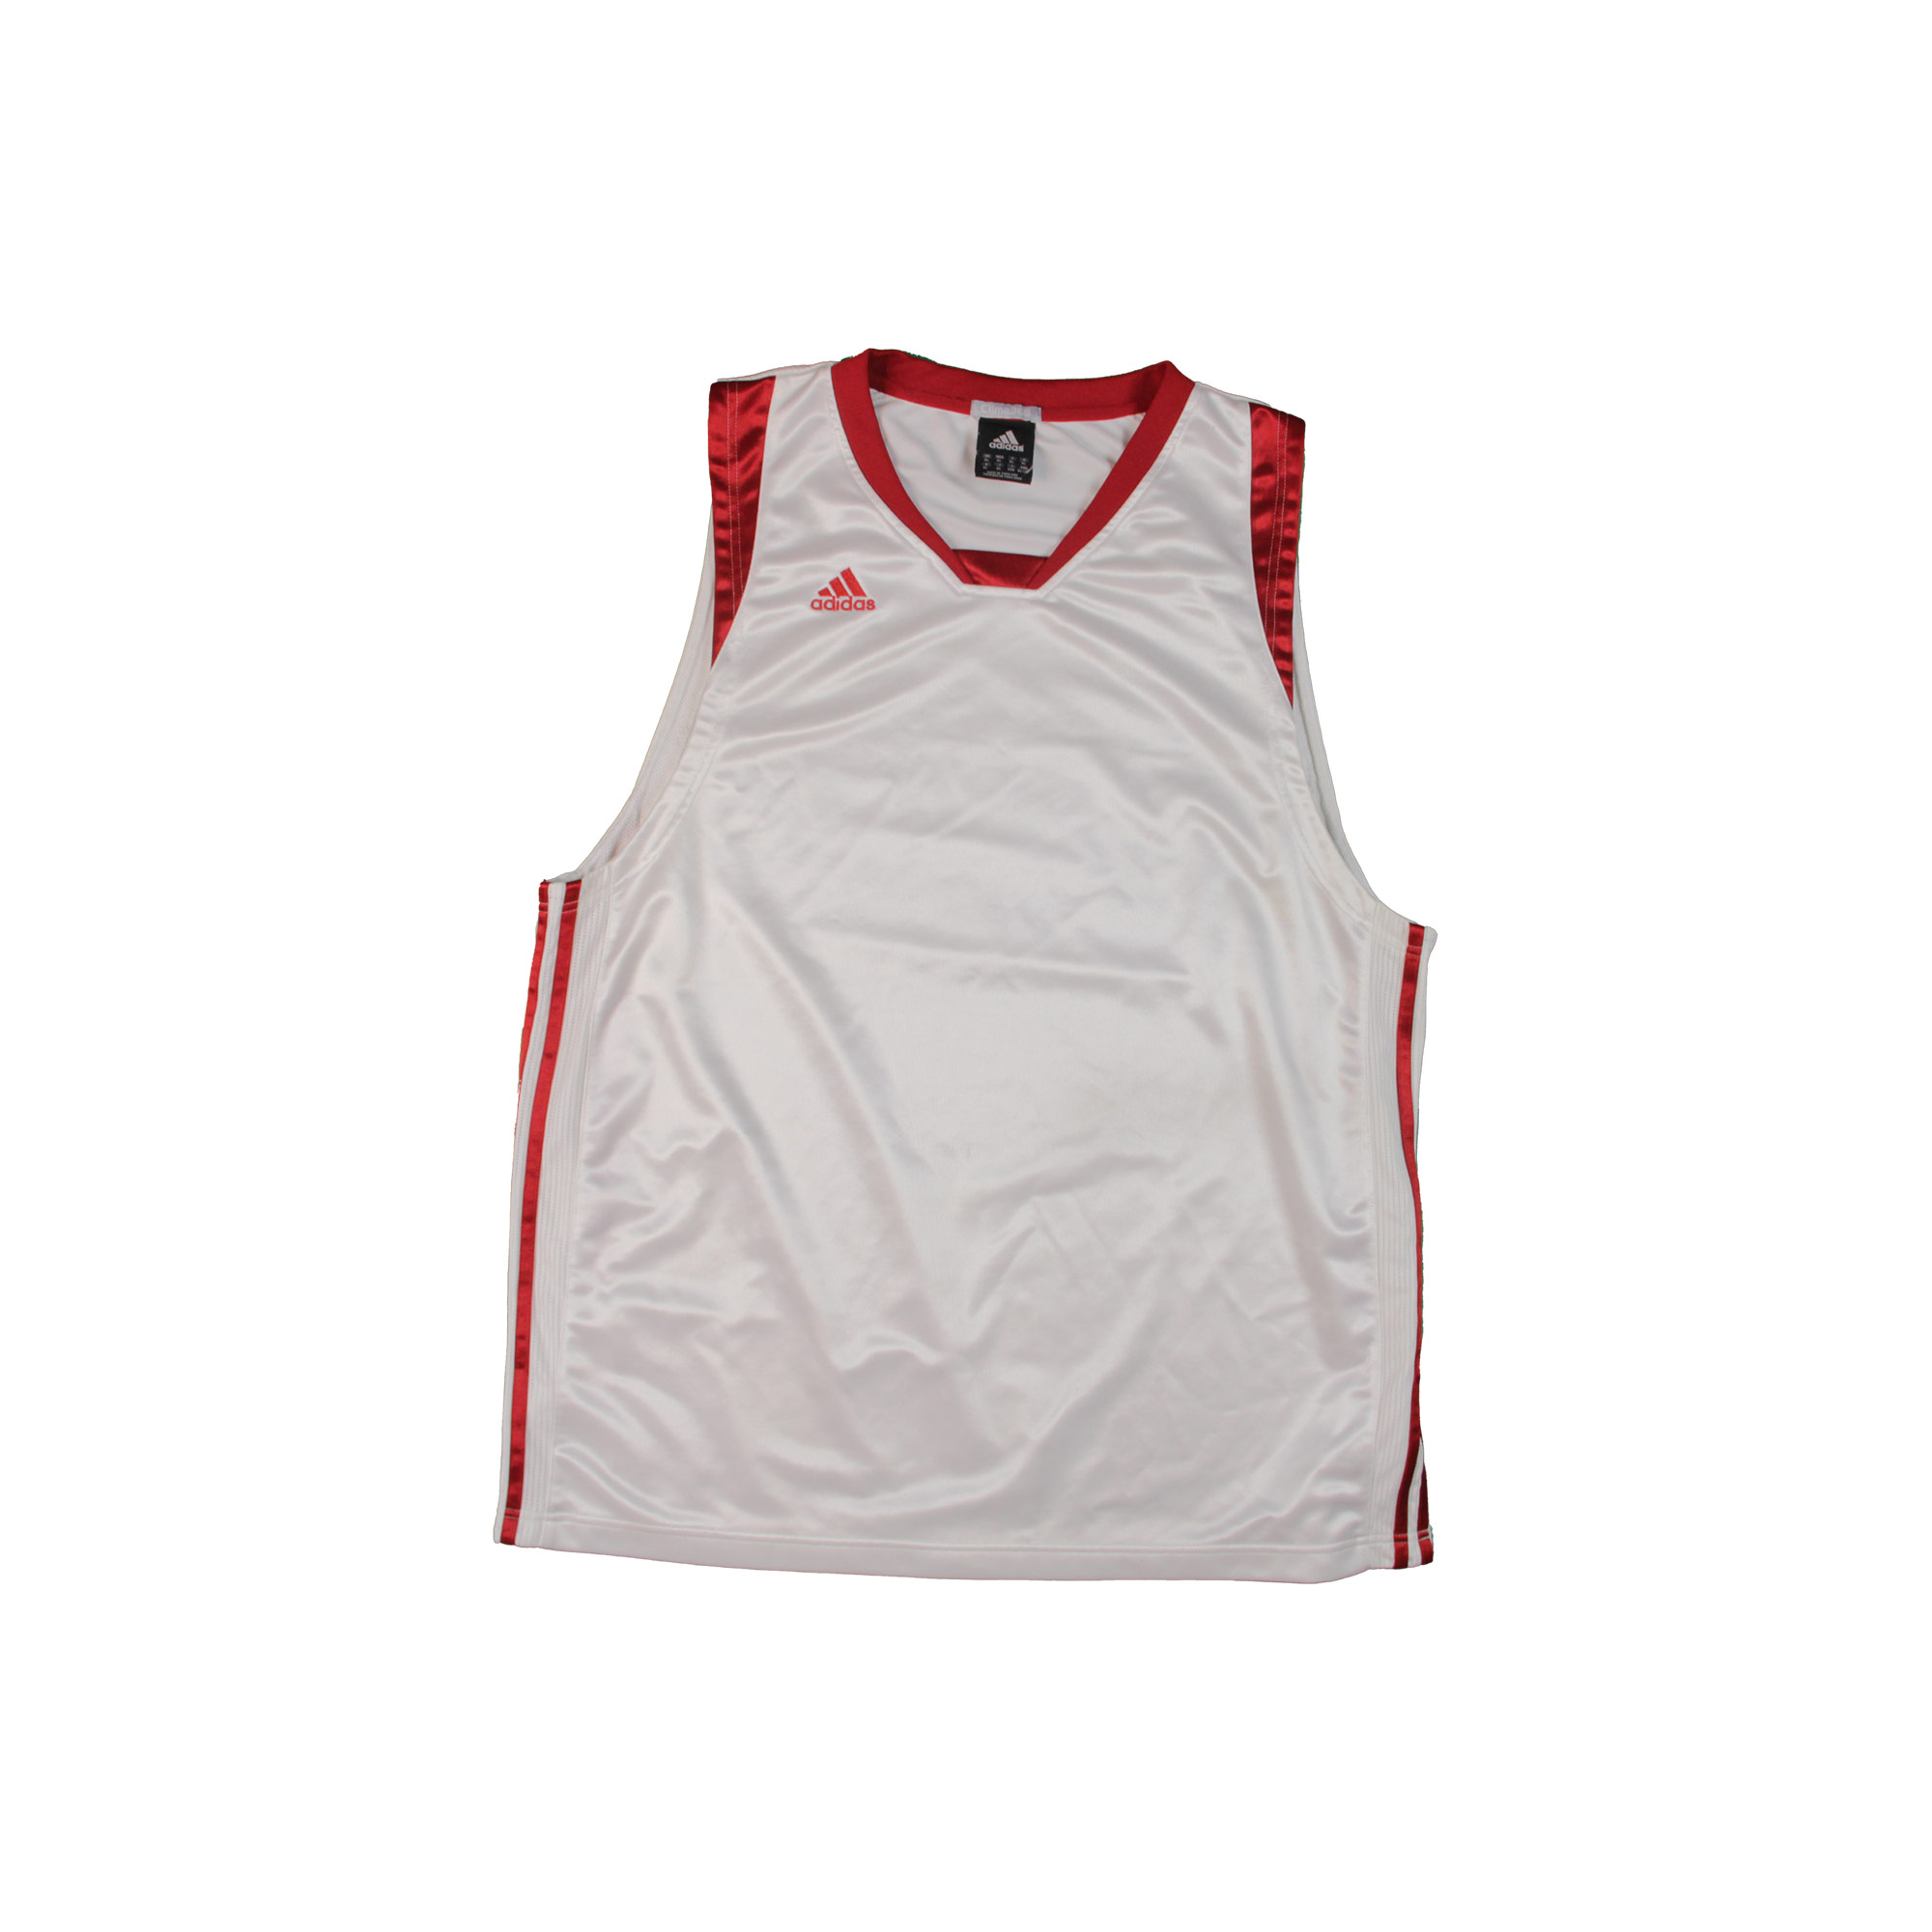 Adidas Vintage Basketball Tanktop T-Shirt - XL